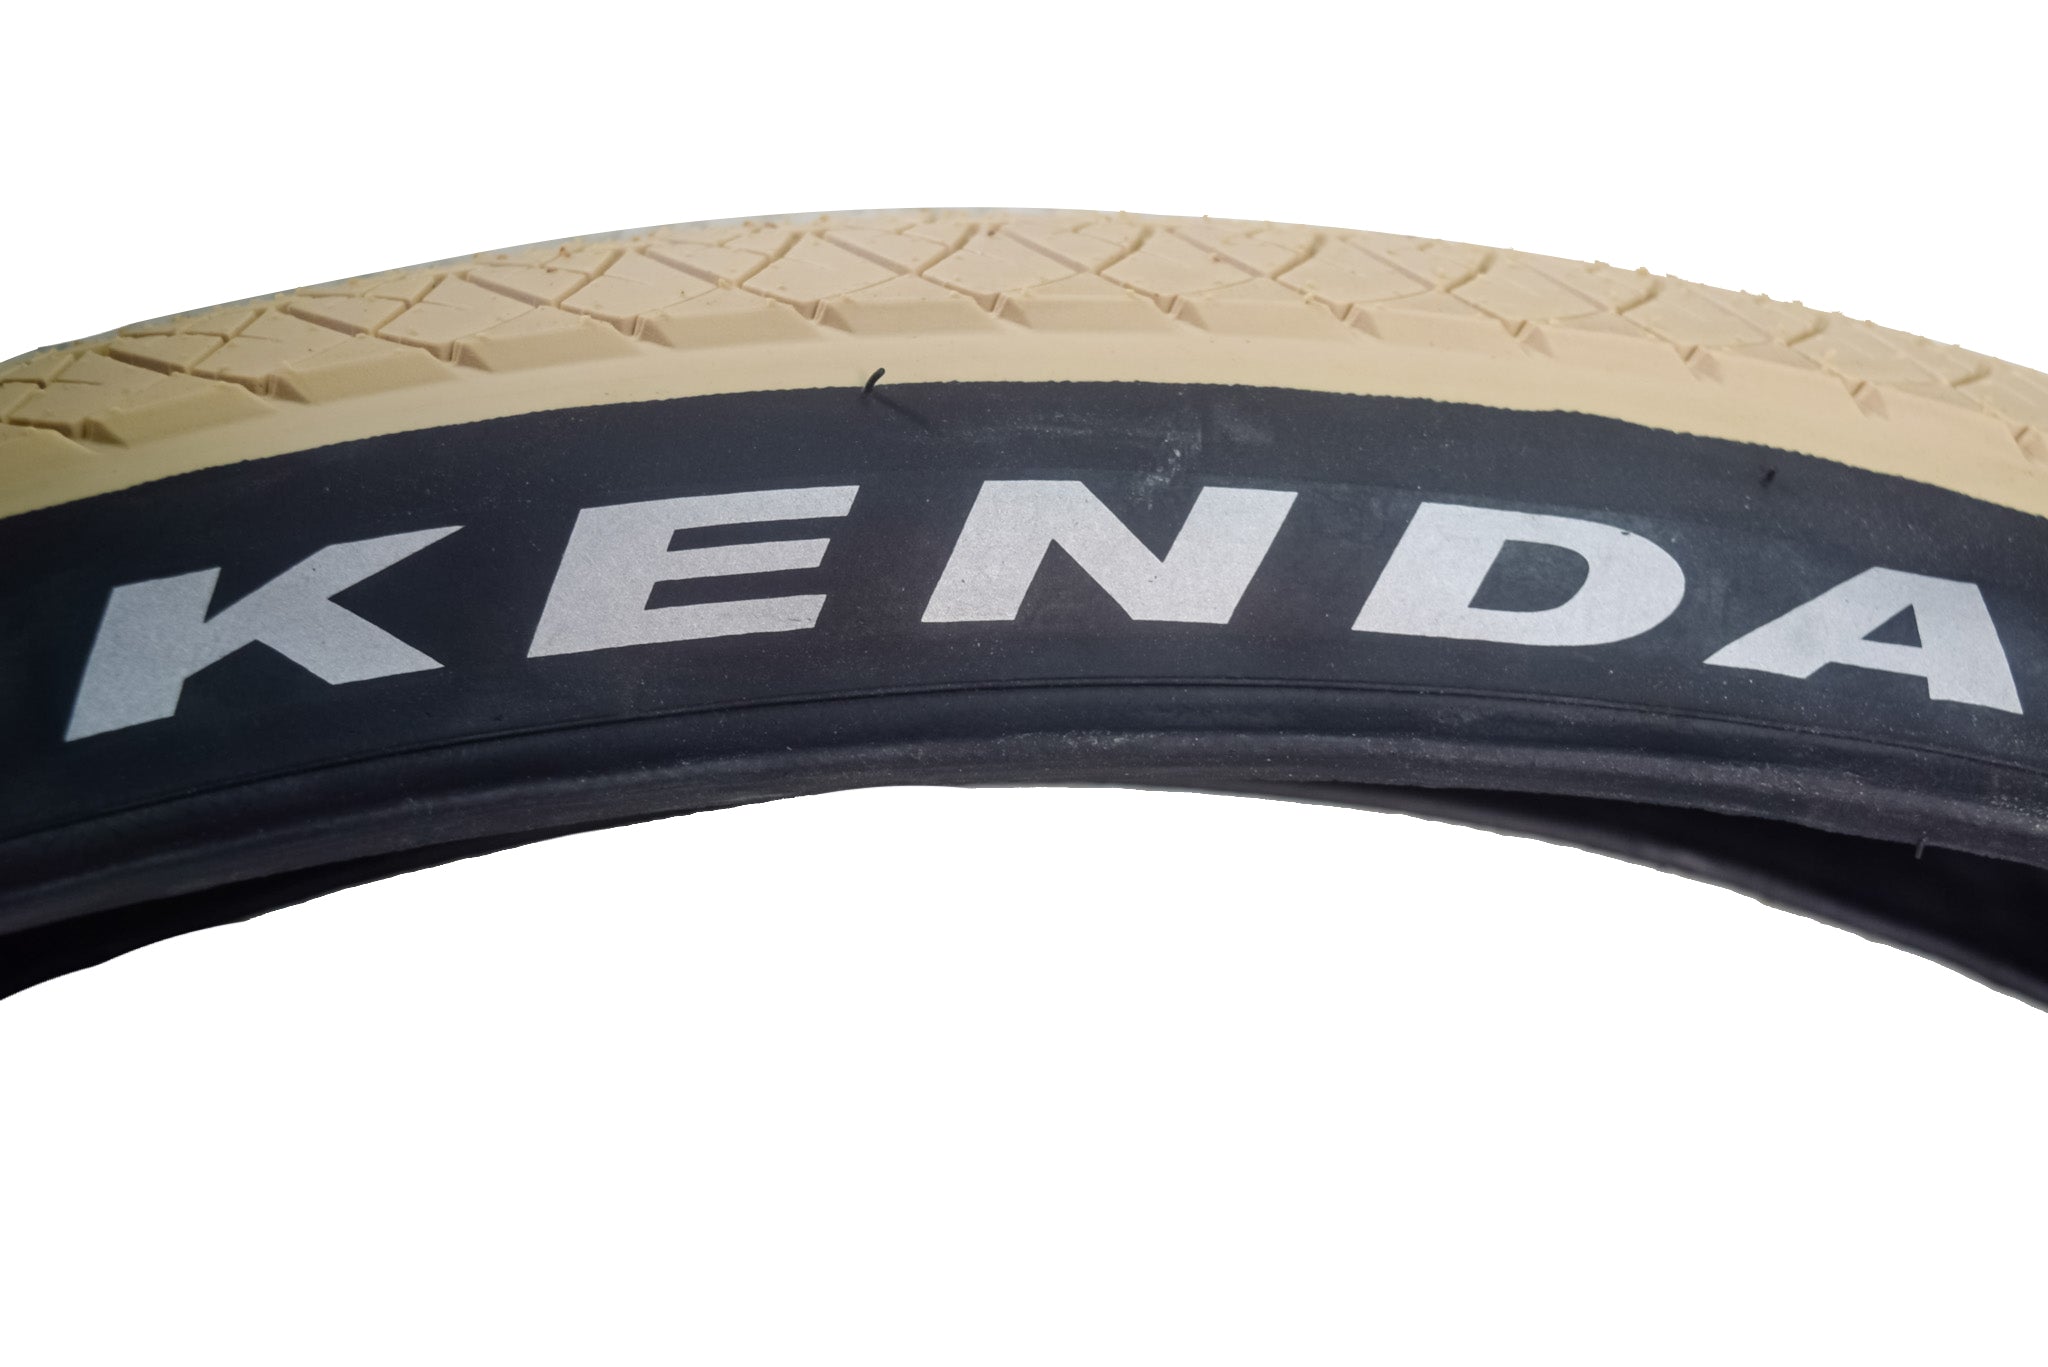 Kenda 3-Sixty Pro TR 120tpi 26x2.5 Tire, 26x2.00-2.40 Tube & Keychain (Two Pack)